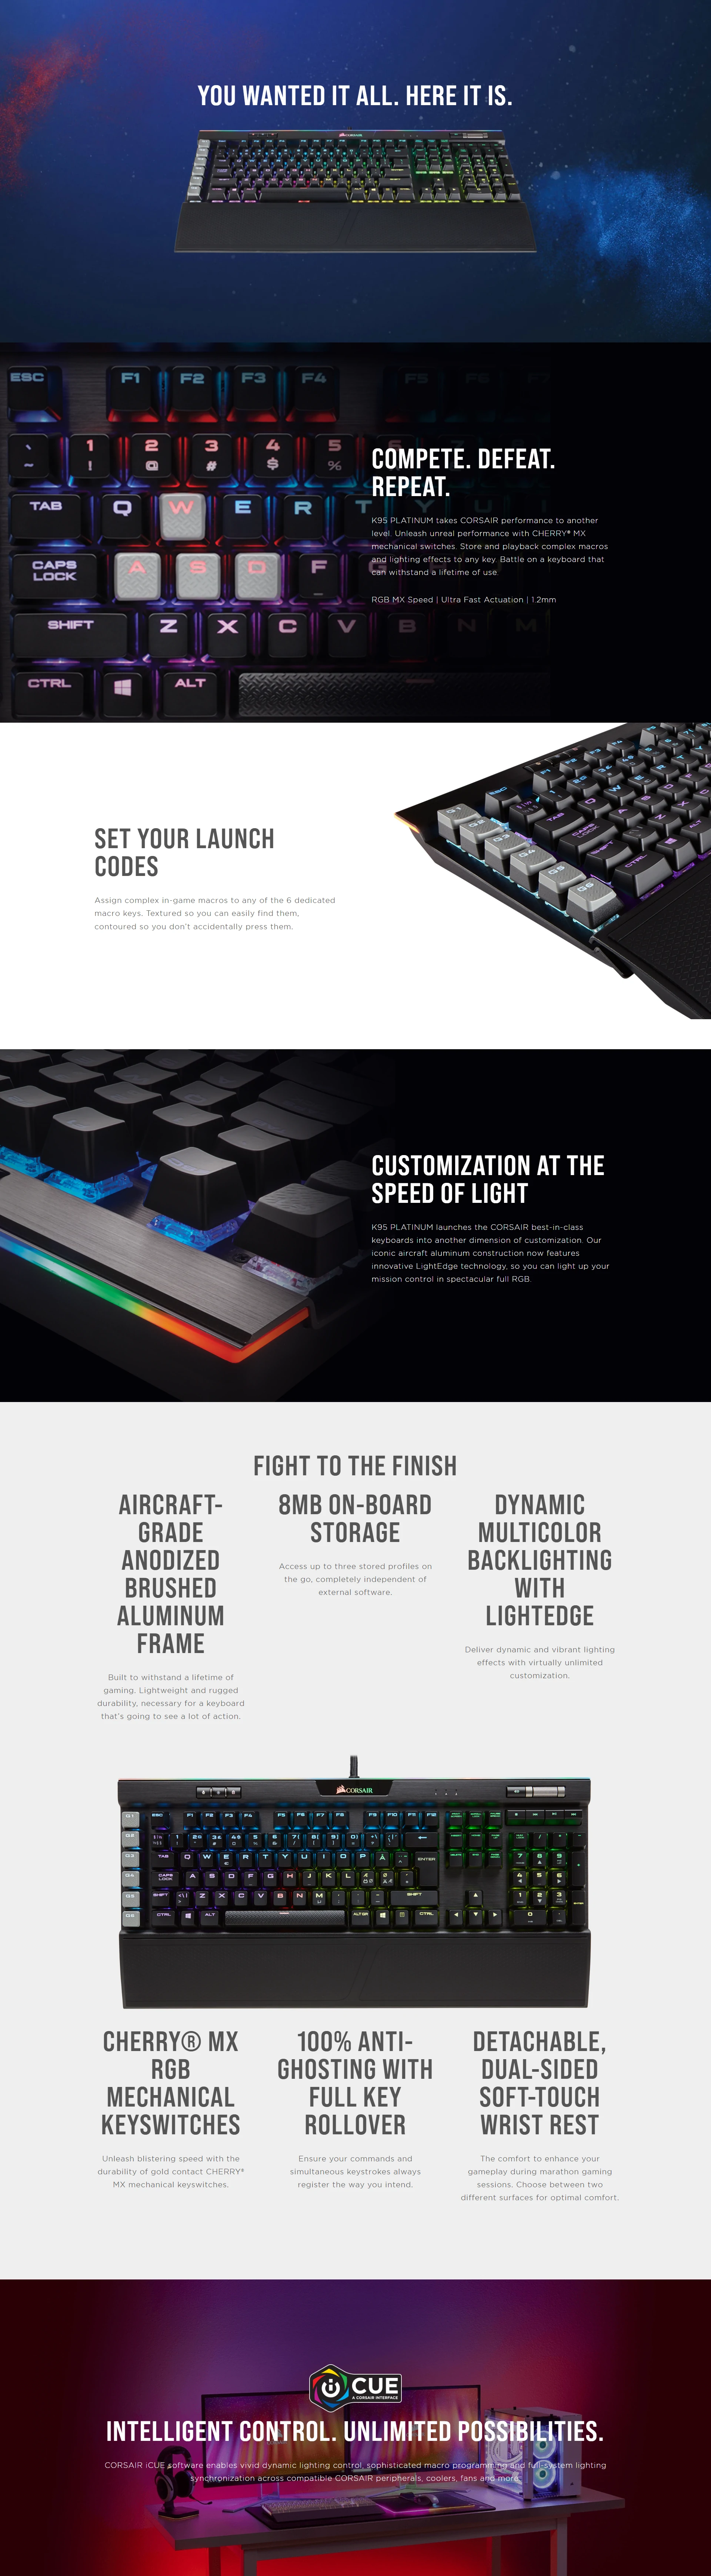 Overview - Corsair K95 RGB PLATINUM Mechanical Gaming Keyboard